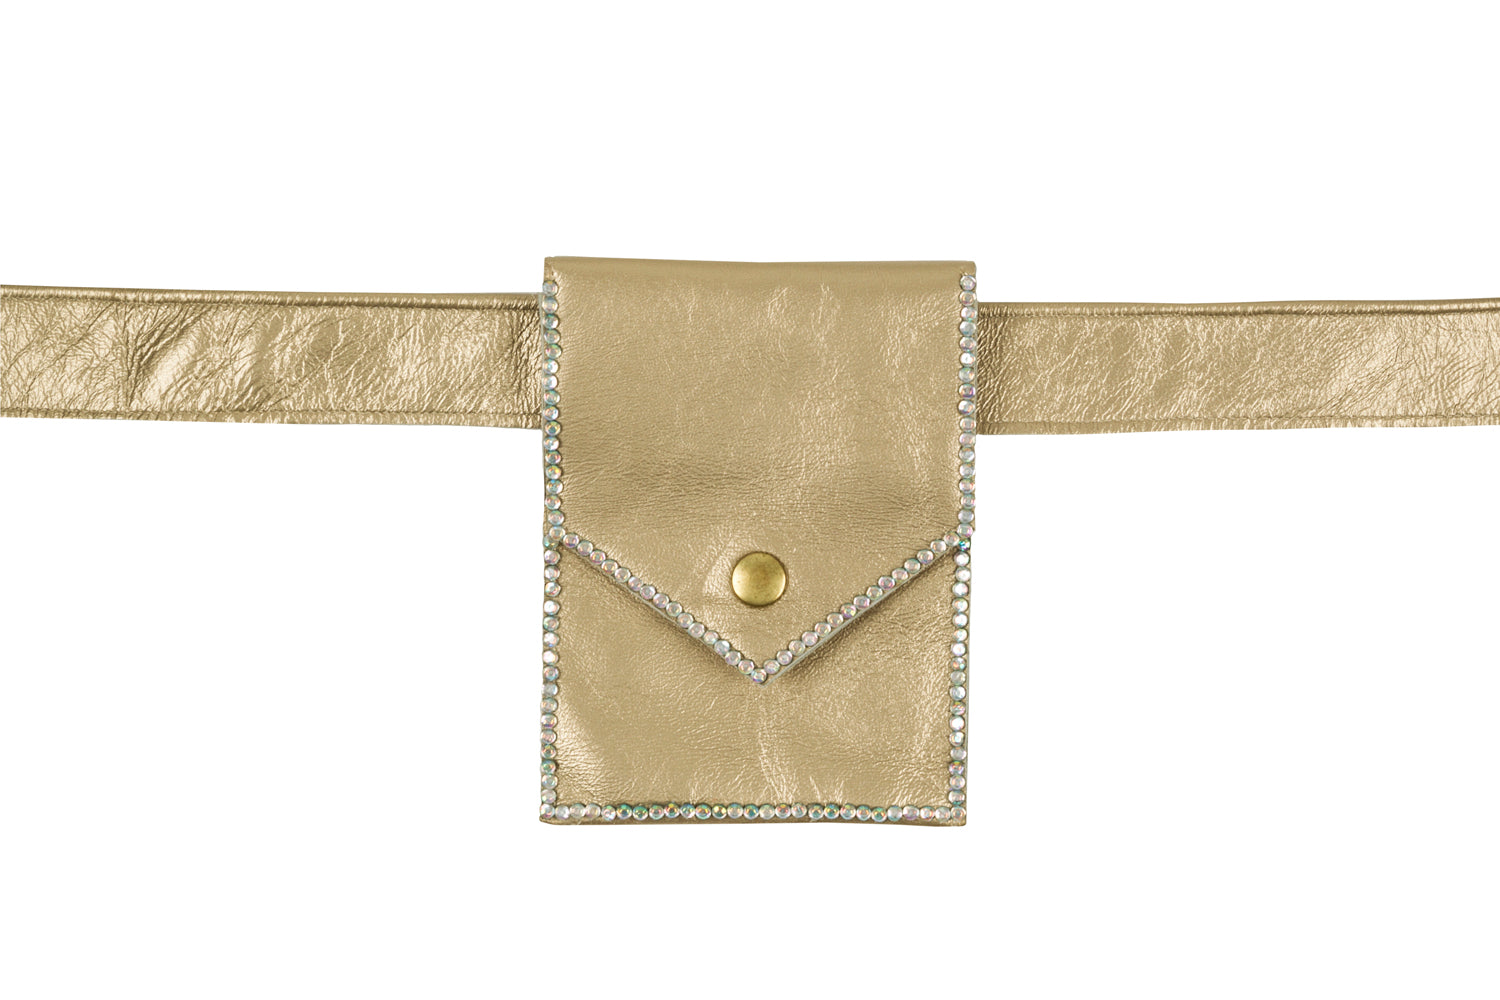 SAMPLE Gold leather bag